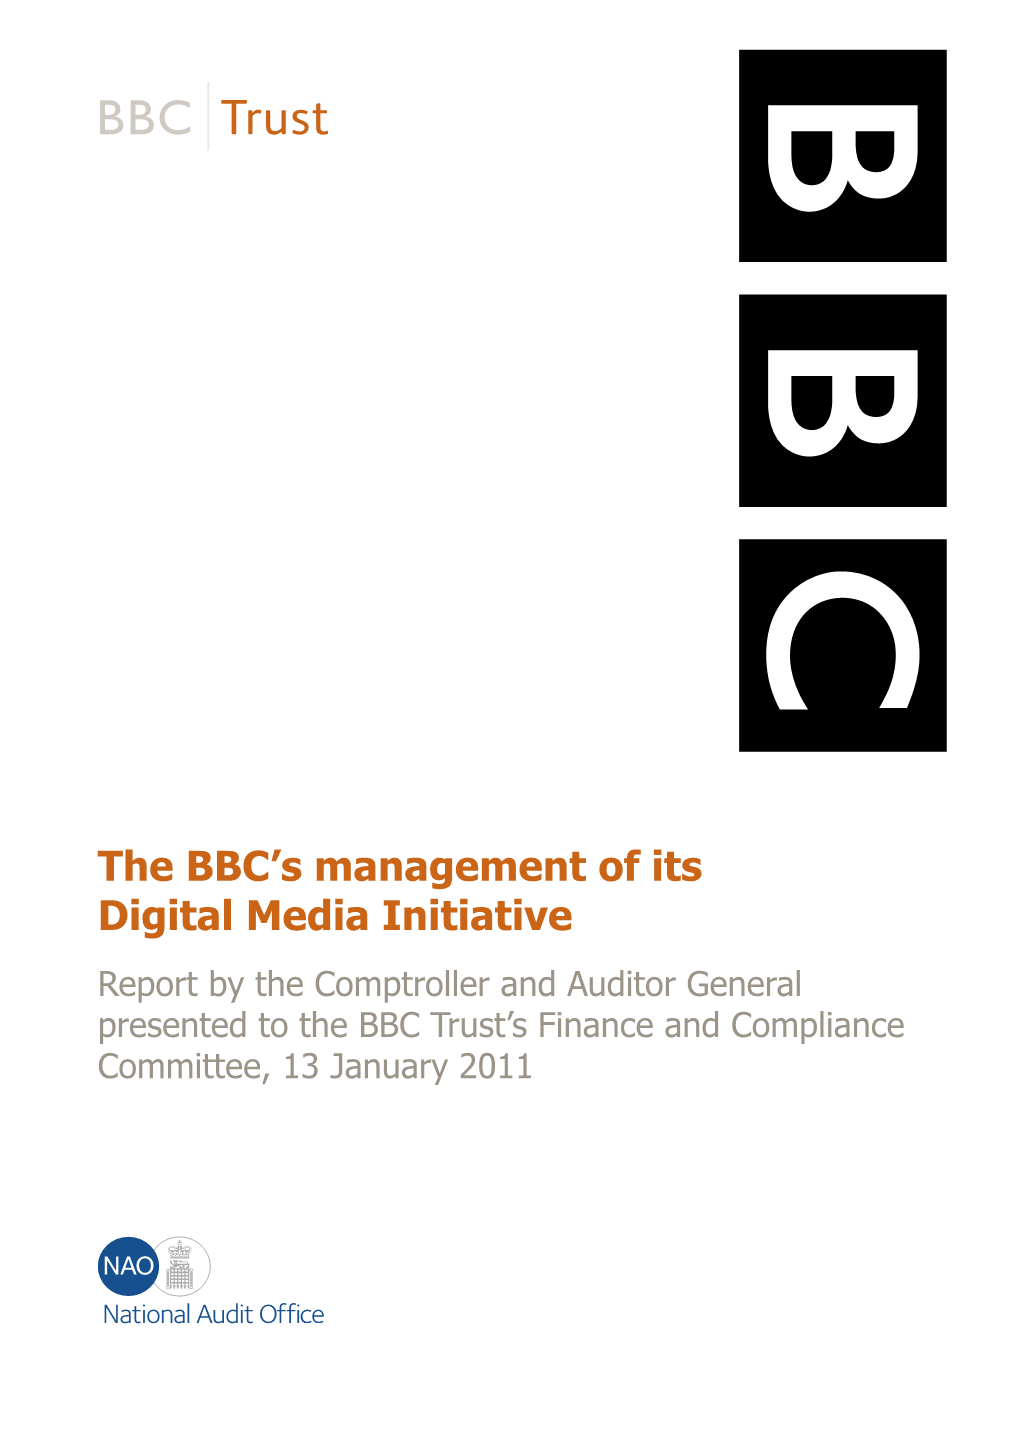 The BBC's Management of Its Digital Media Initiative, PDF File